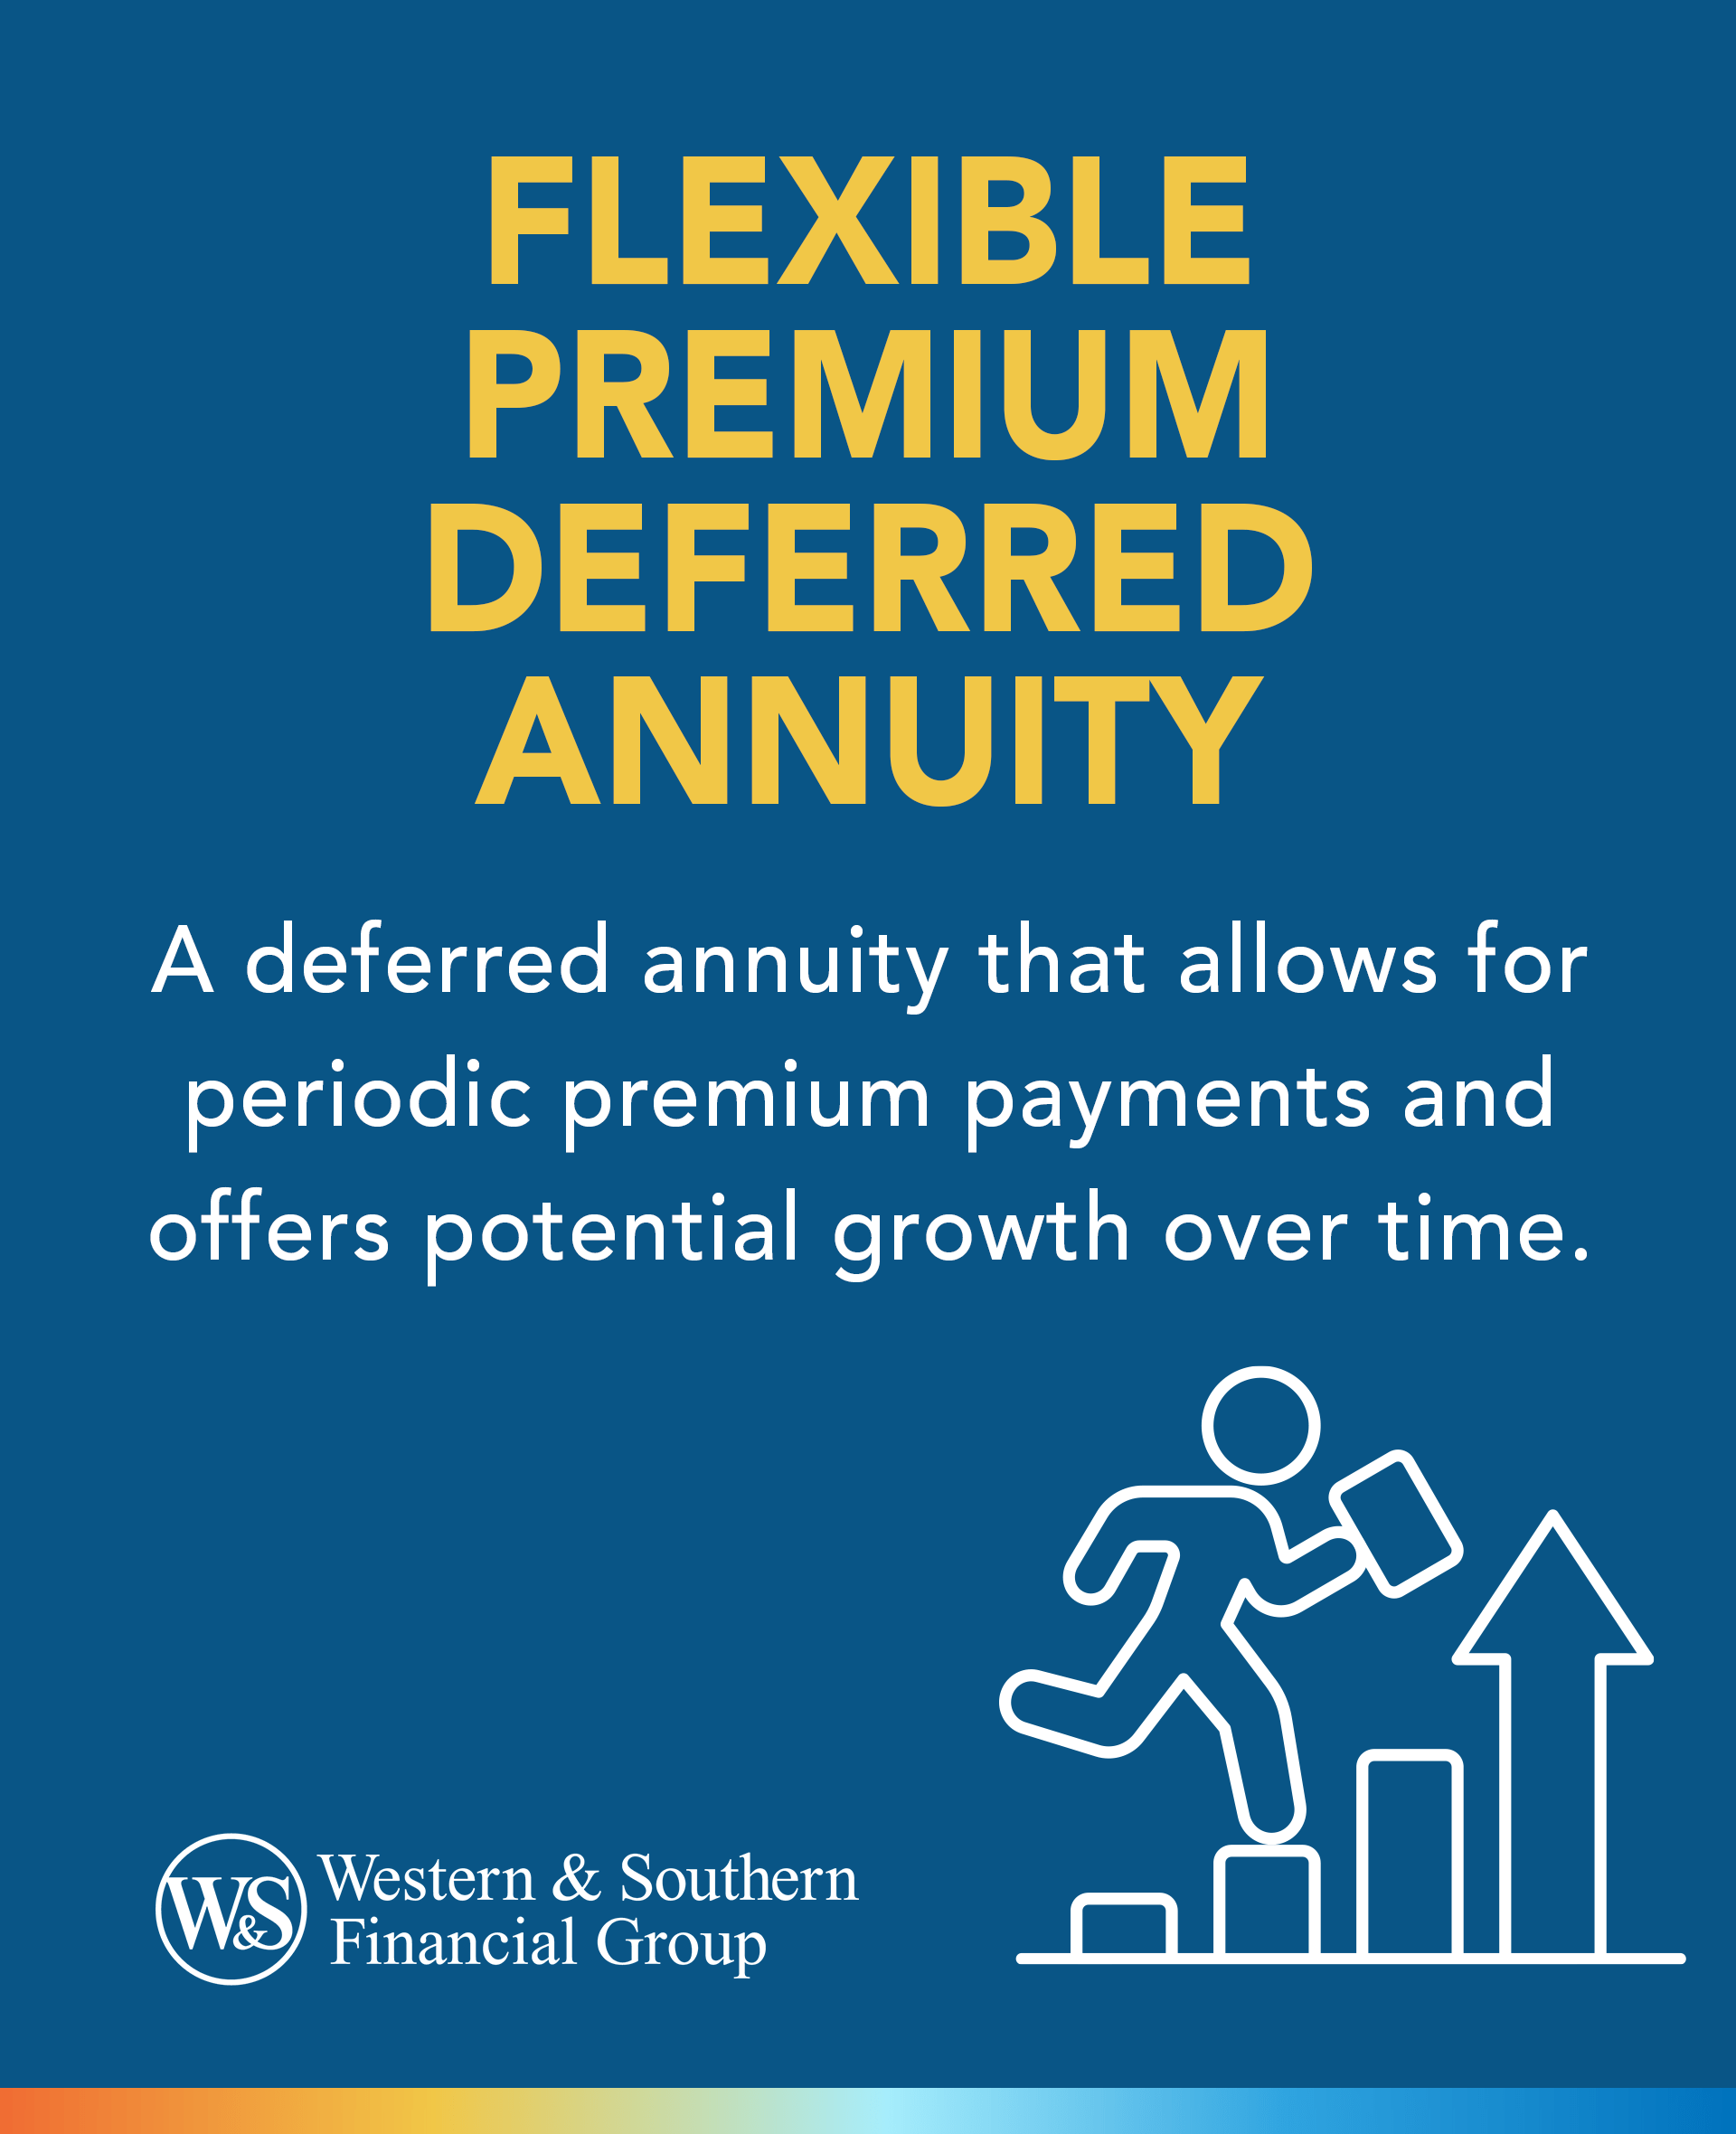 Flexible Premium Deferred Annuity definition